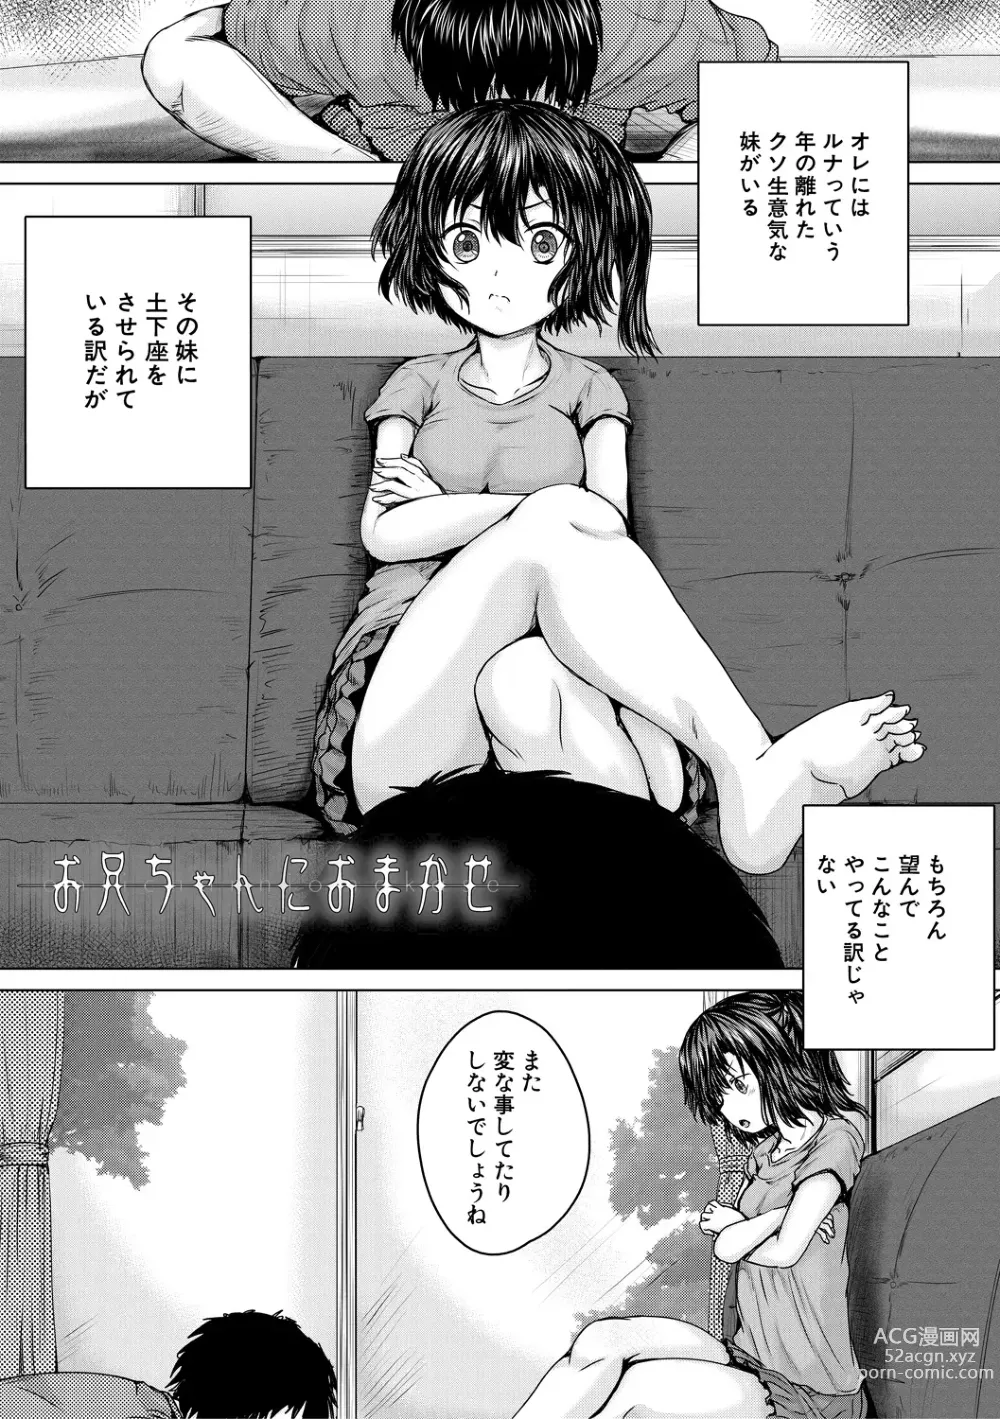 Page 5 of manga Shojo Imouto Nama Iki Sekkan